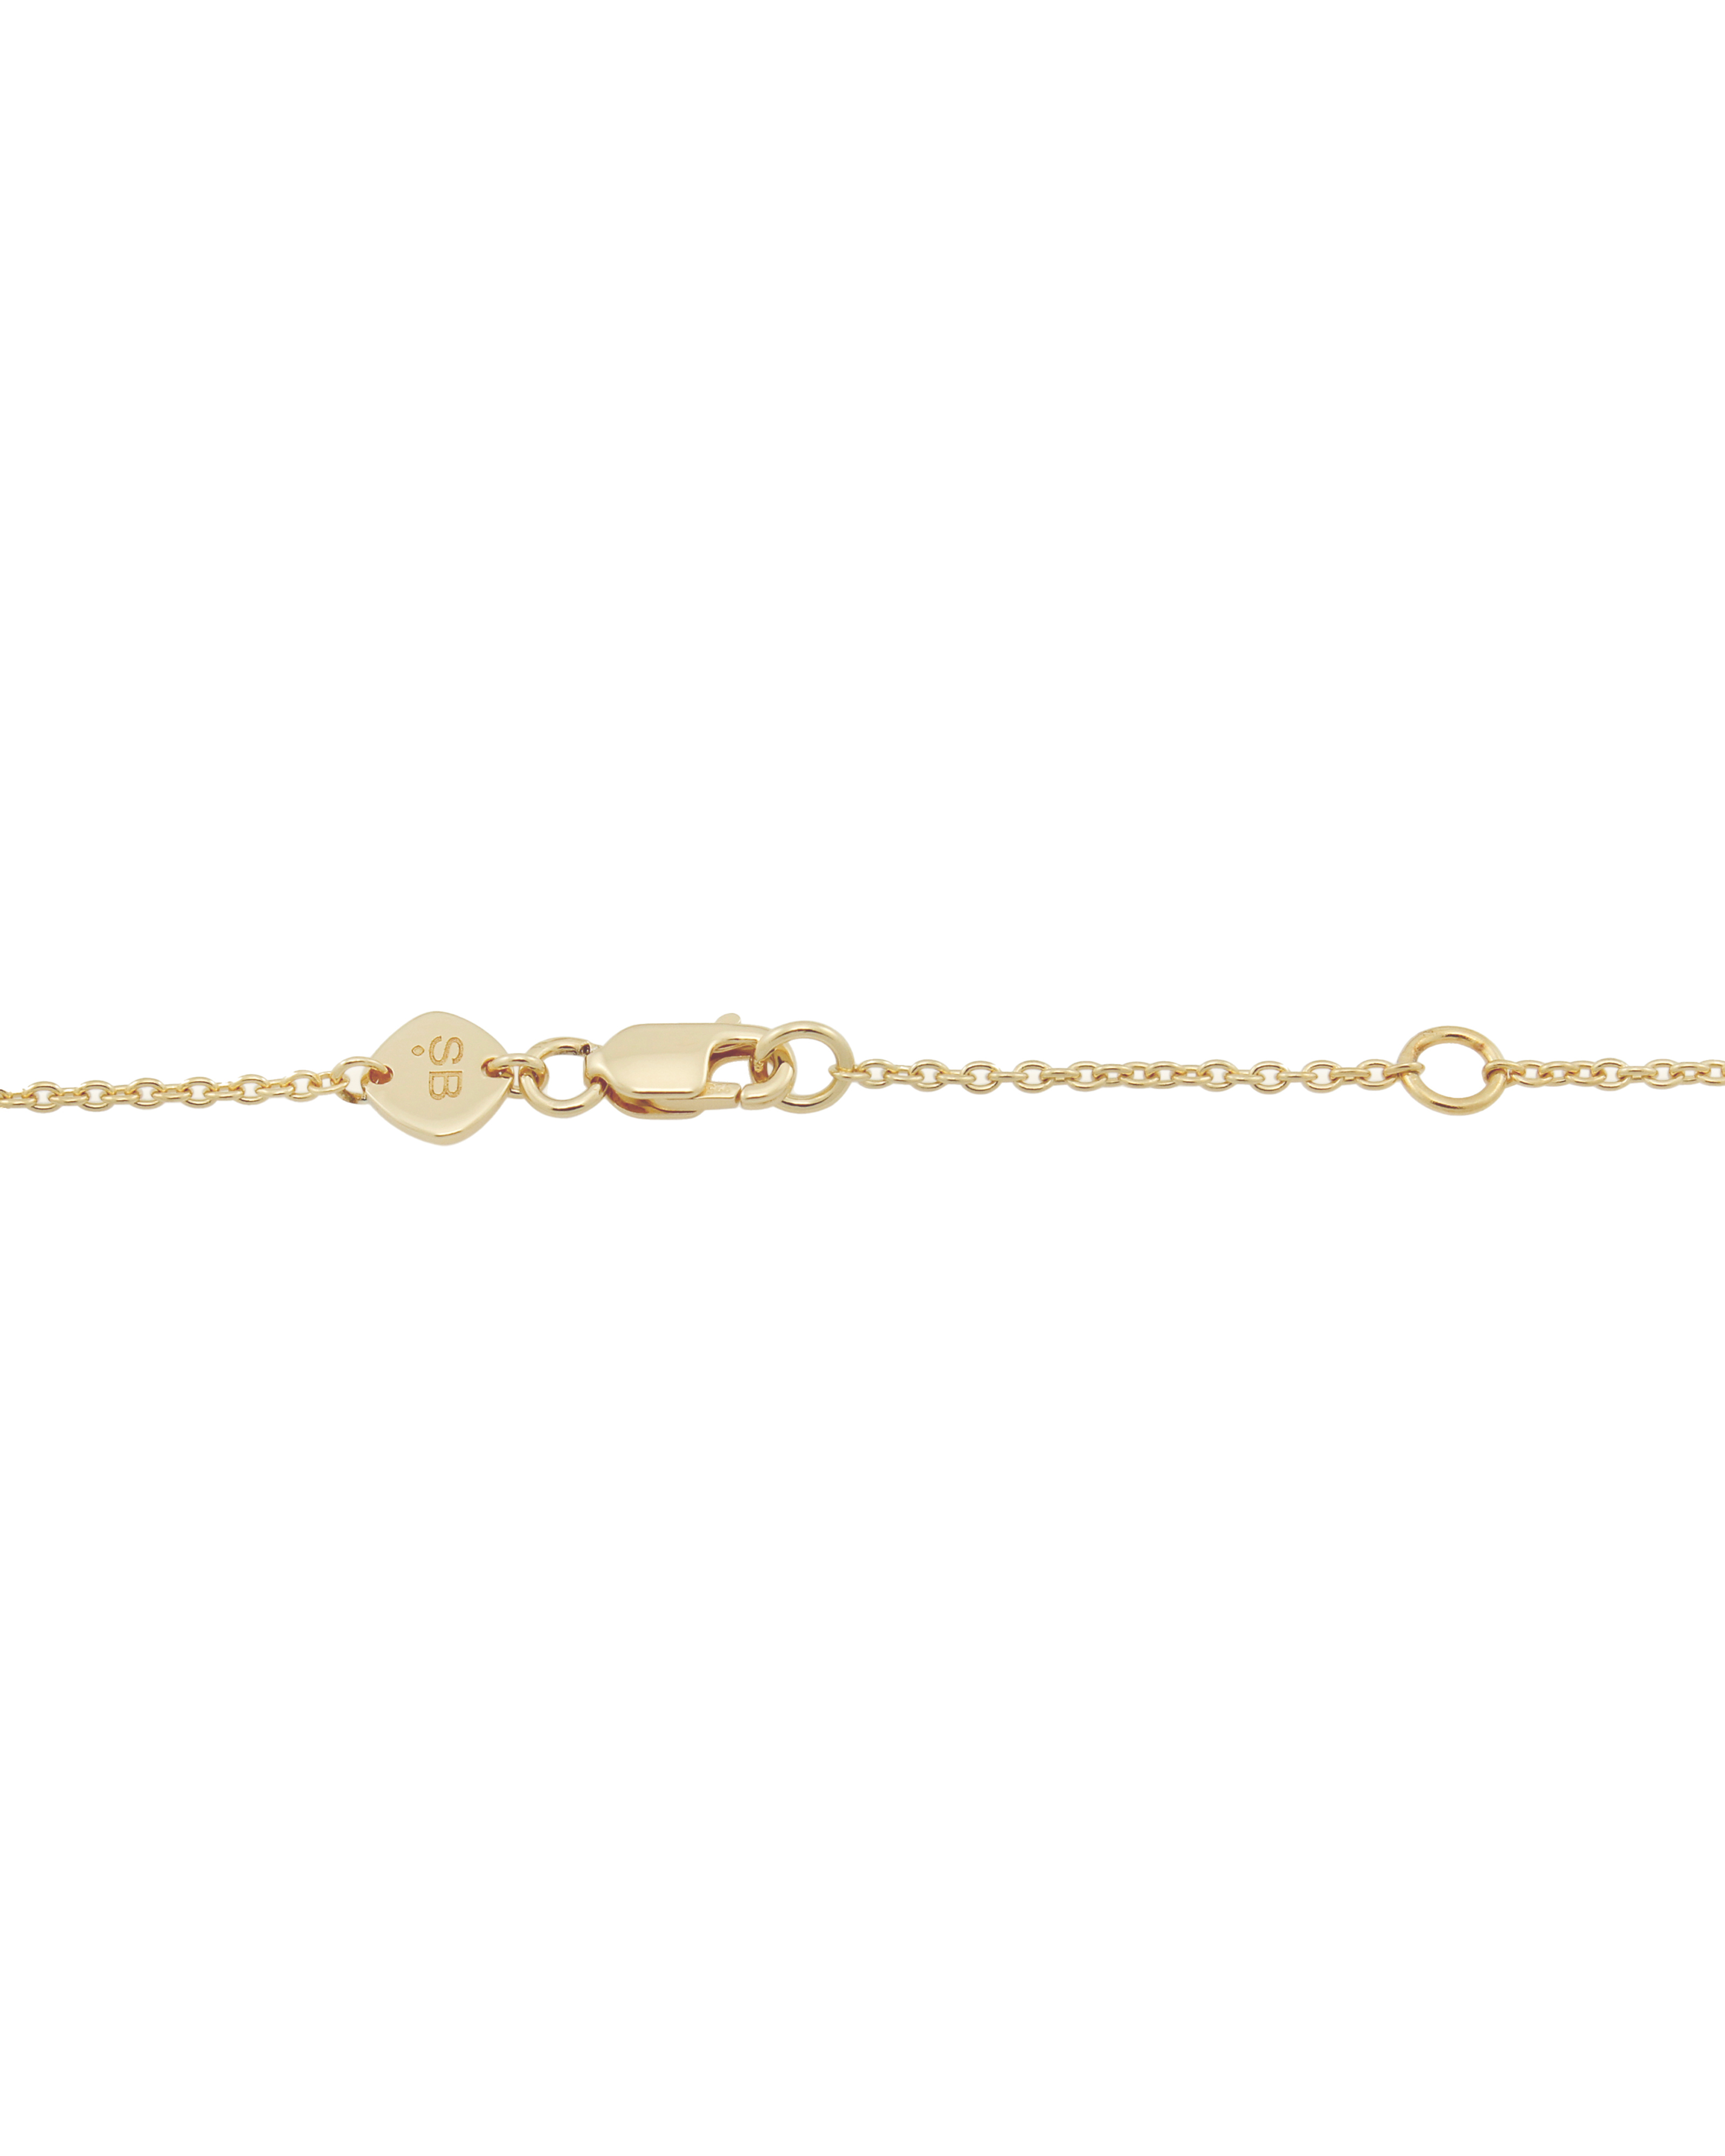      sener-besim-constellation-diamond-necklace-gold